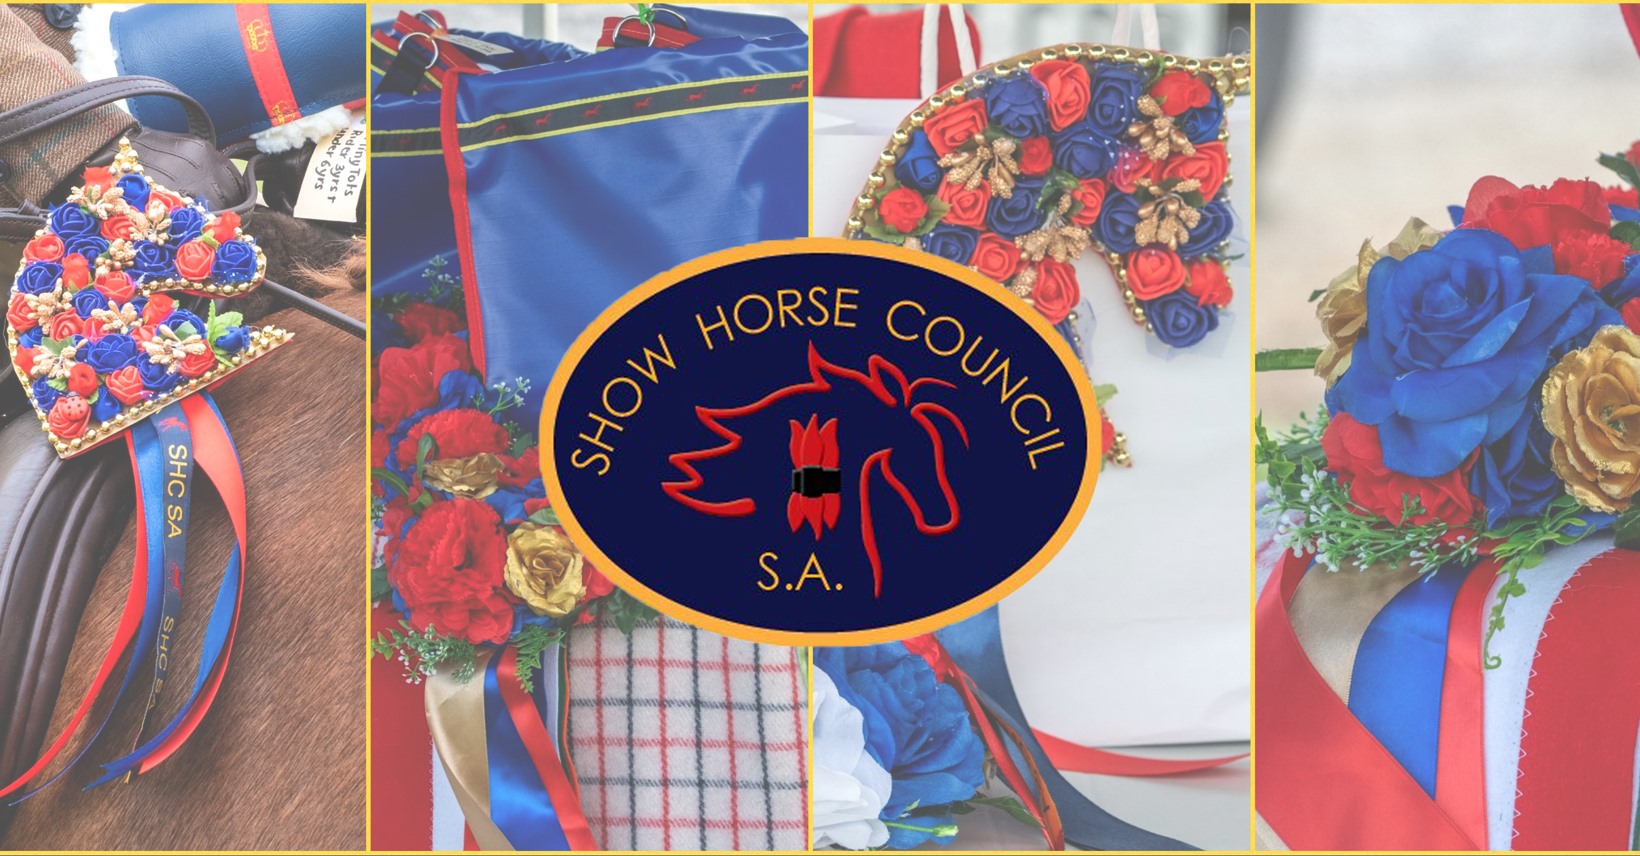 Show Horse Council of South Australia Inc.